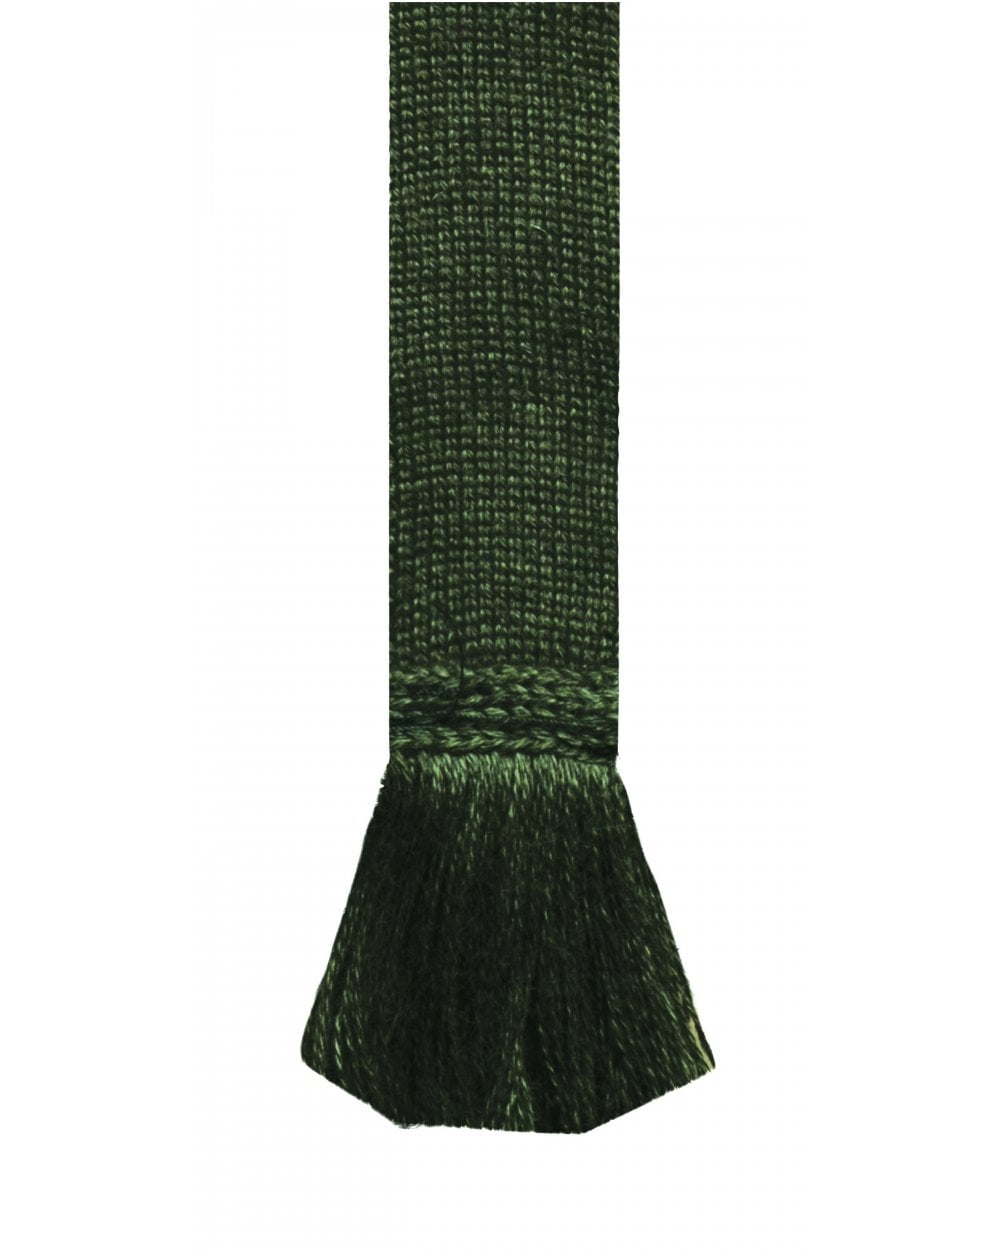 Angus Socks with Garter Ties - Spruce